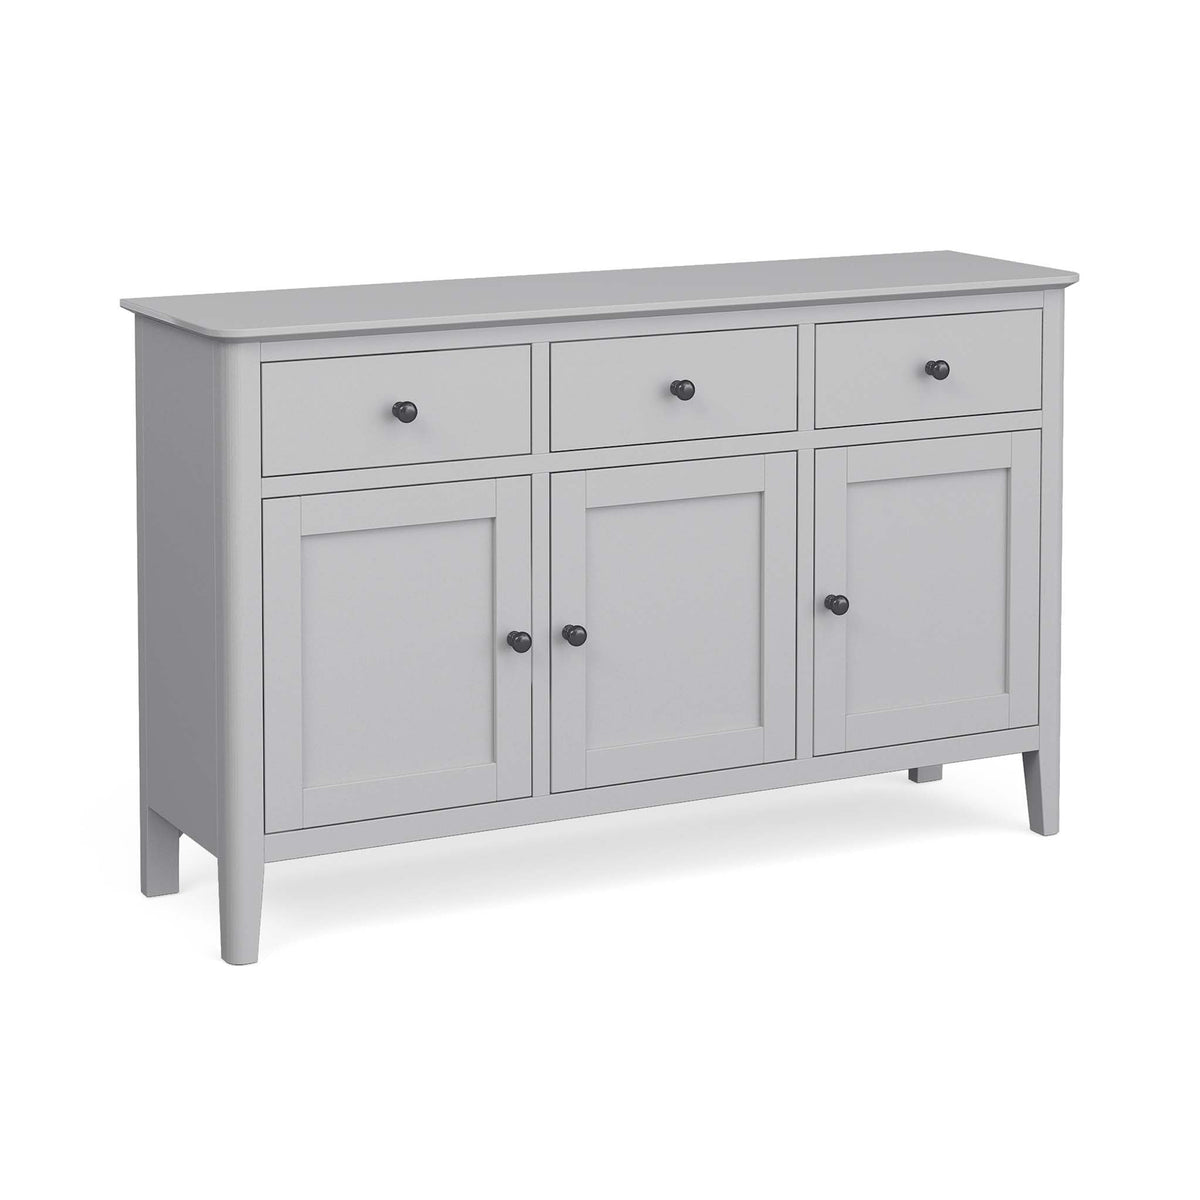 Elgin Grey Large Sideboard Cabinet from Roseland Furniture